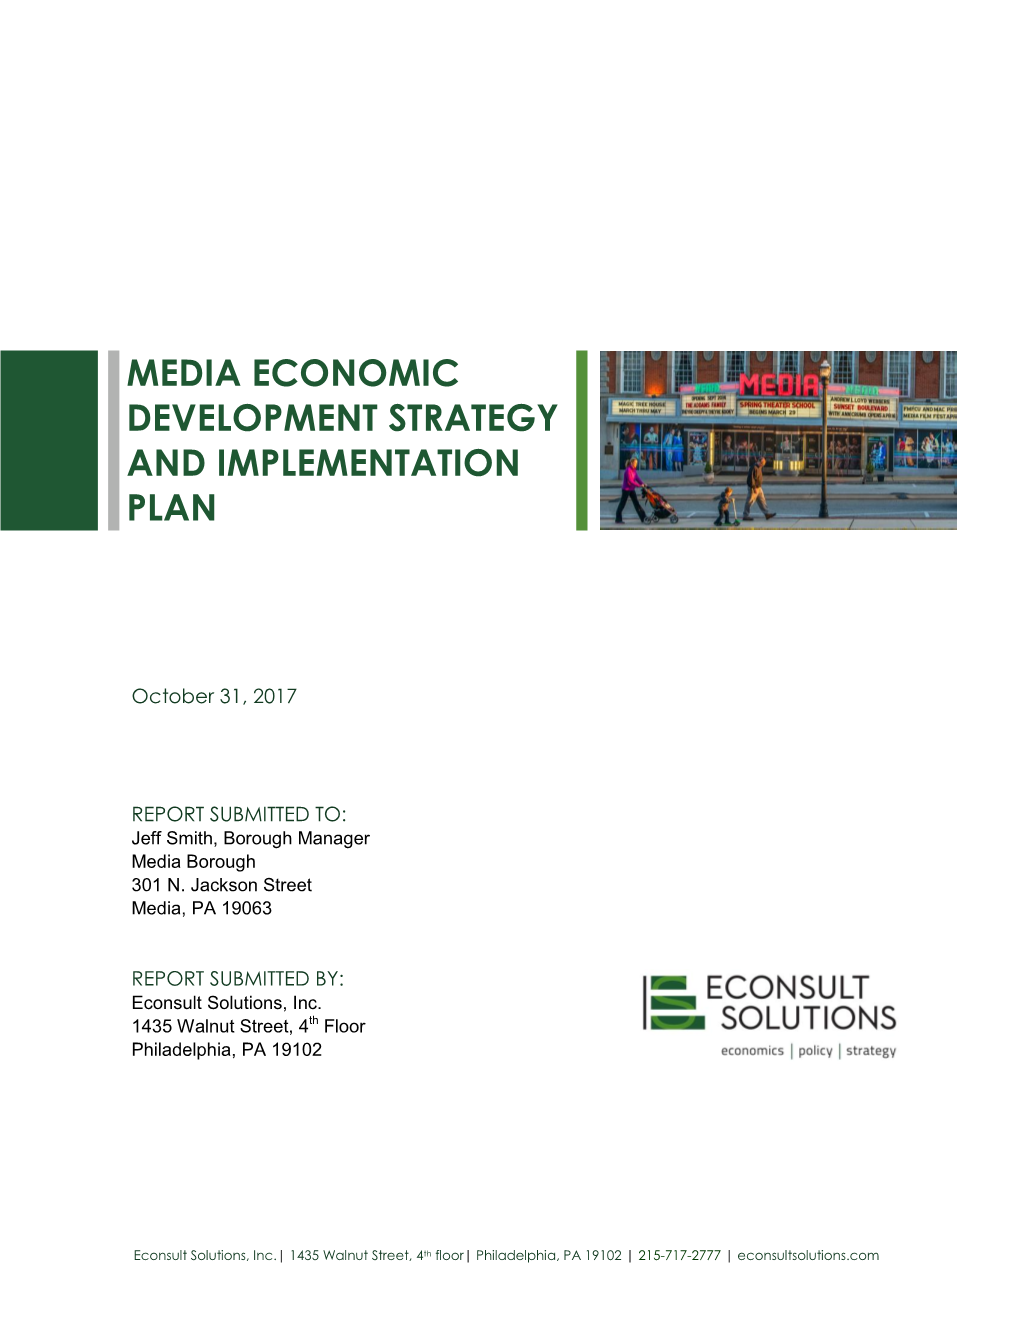 Economic Development Strategy and Implemenation